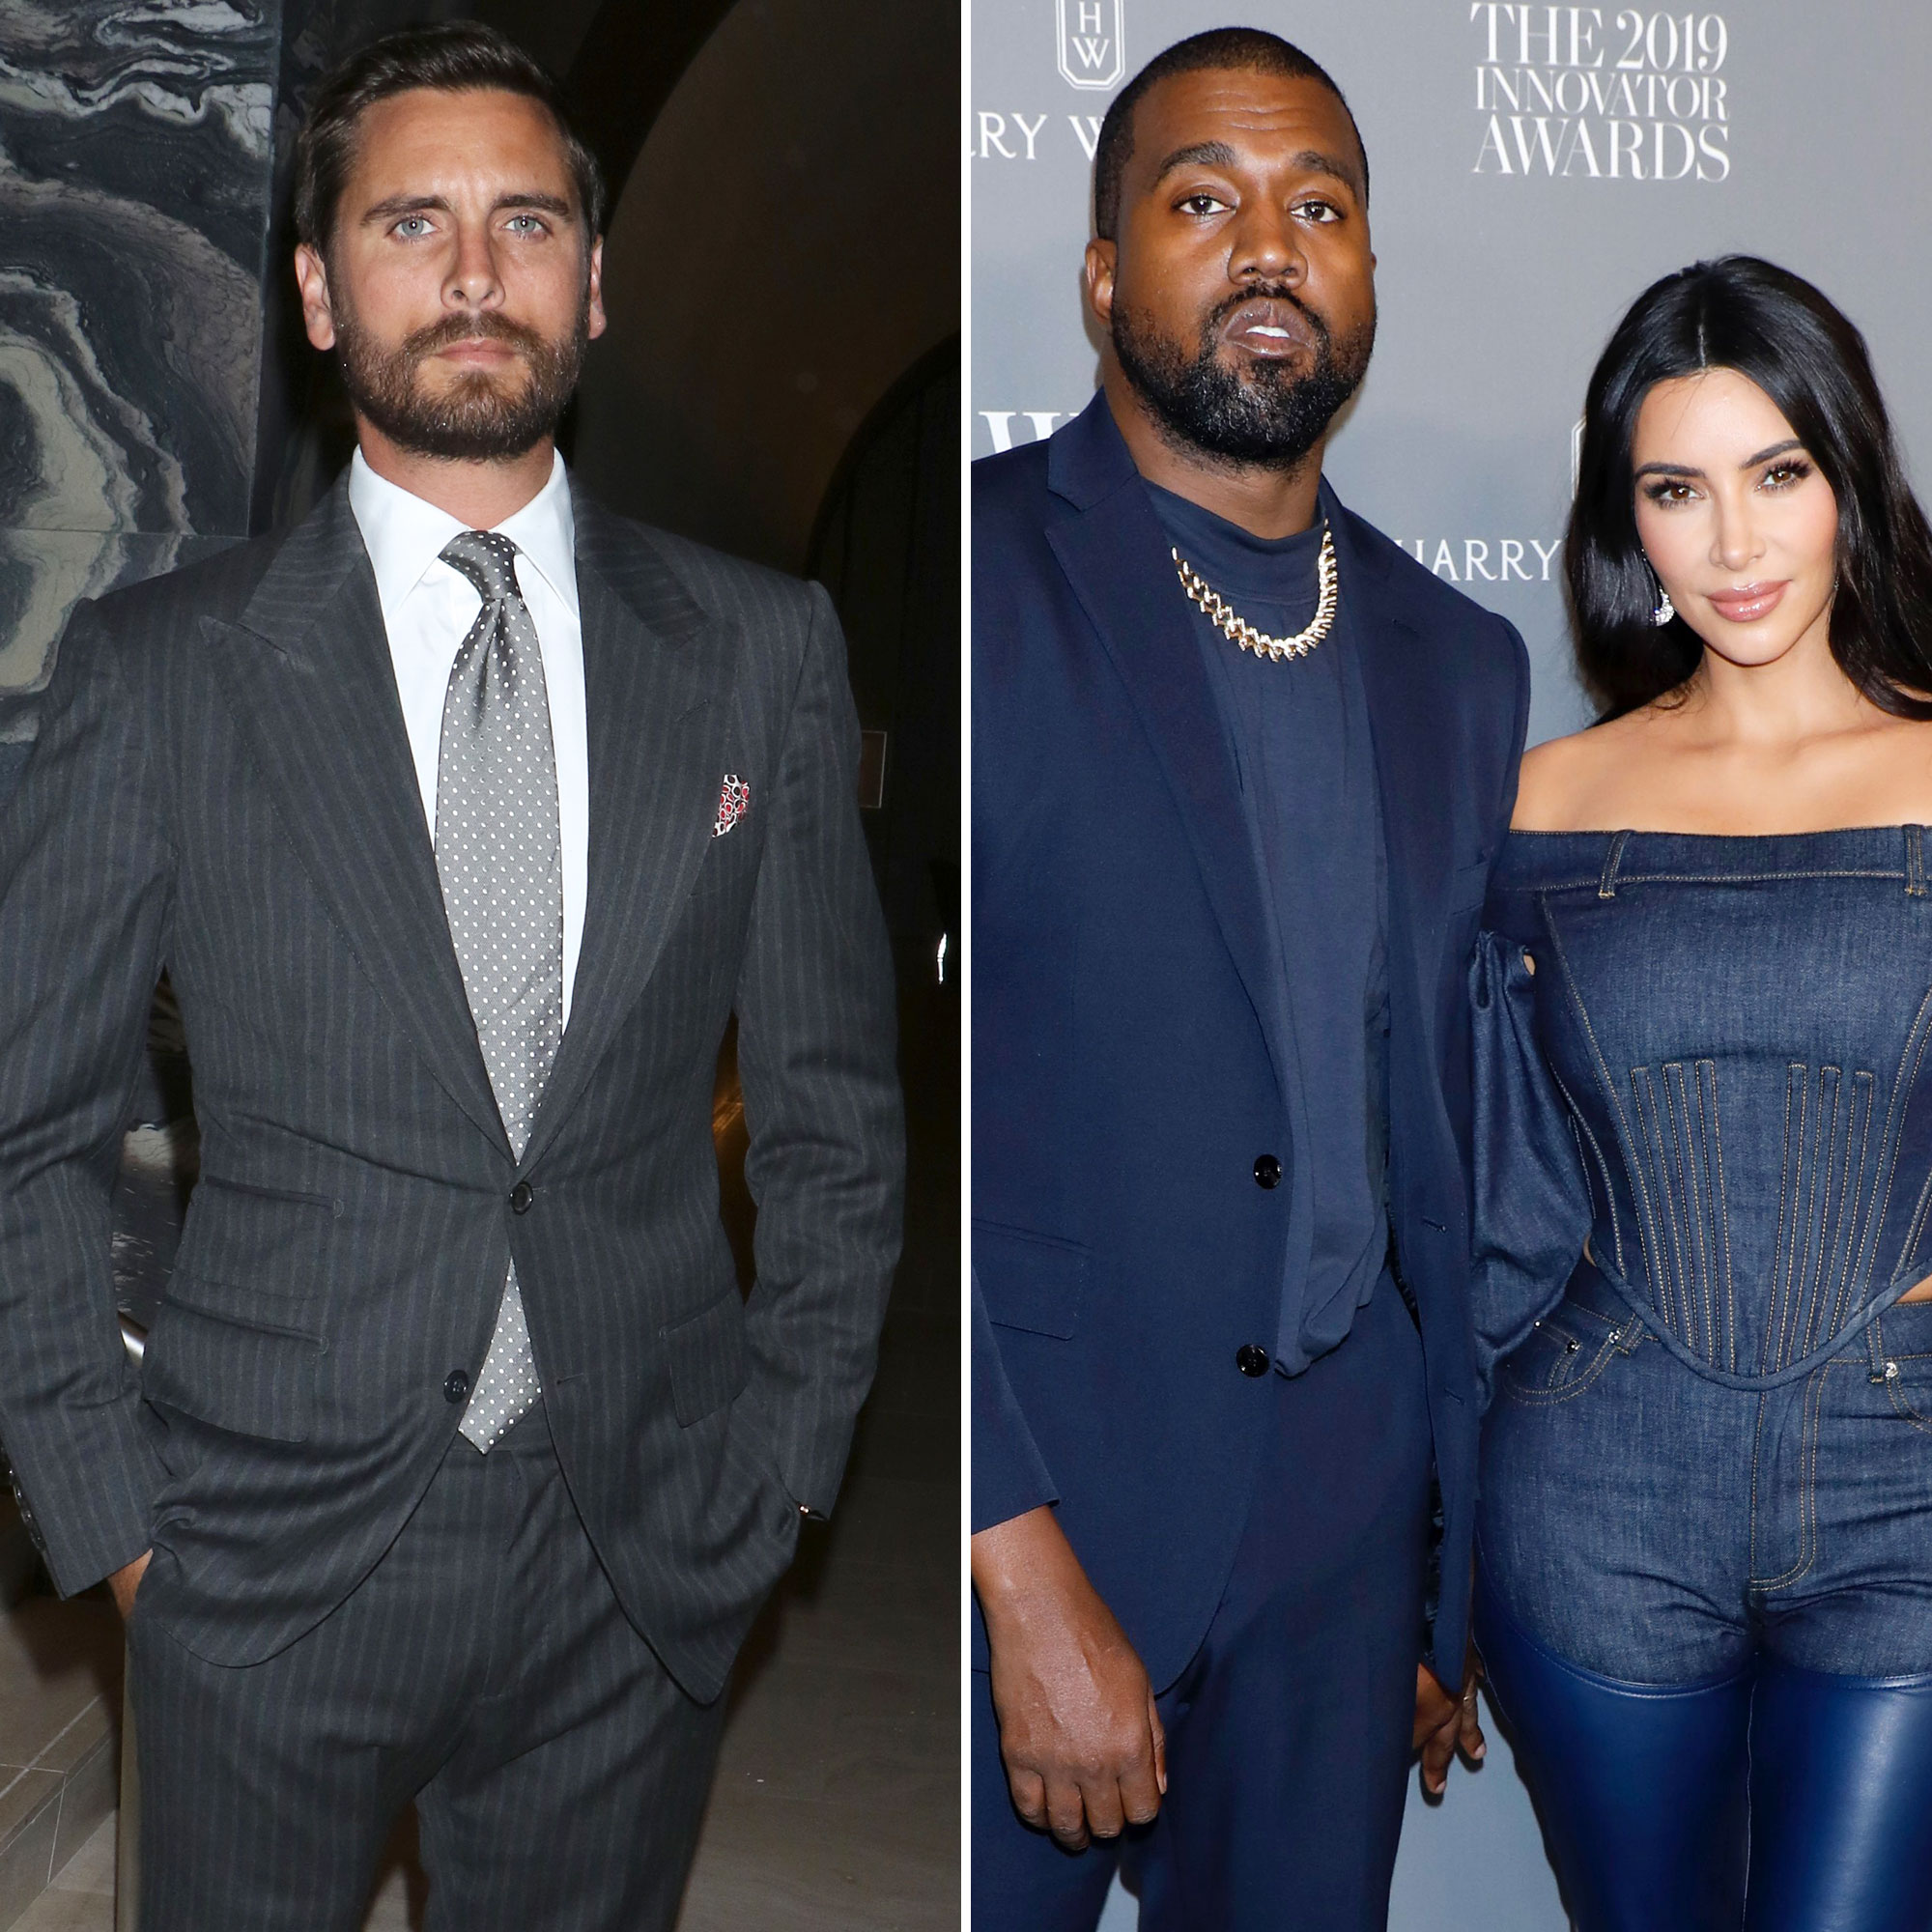 The Kardashians': Kim Kardashian Discusses Split From Kanye West